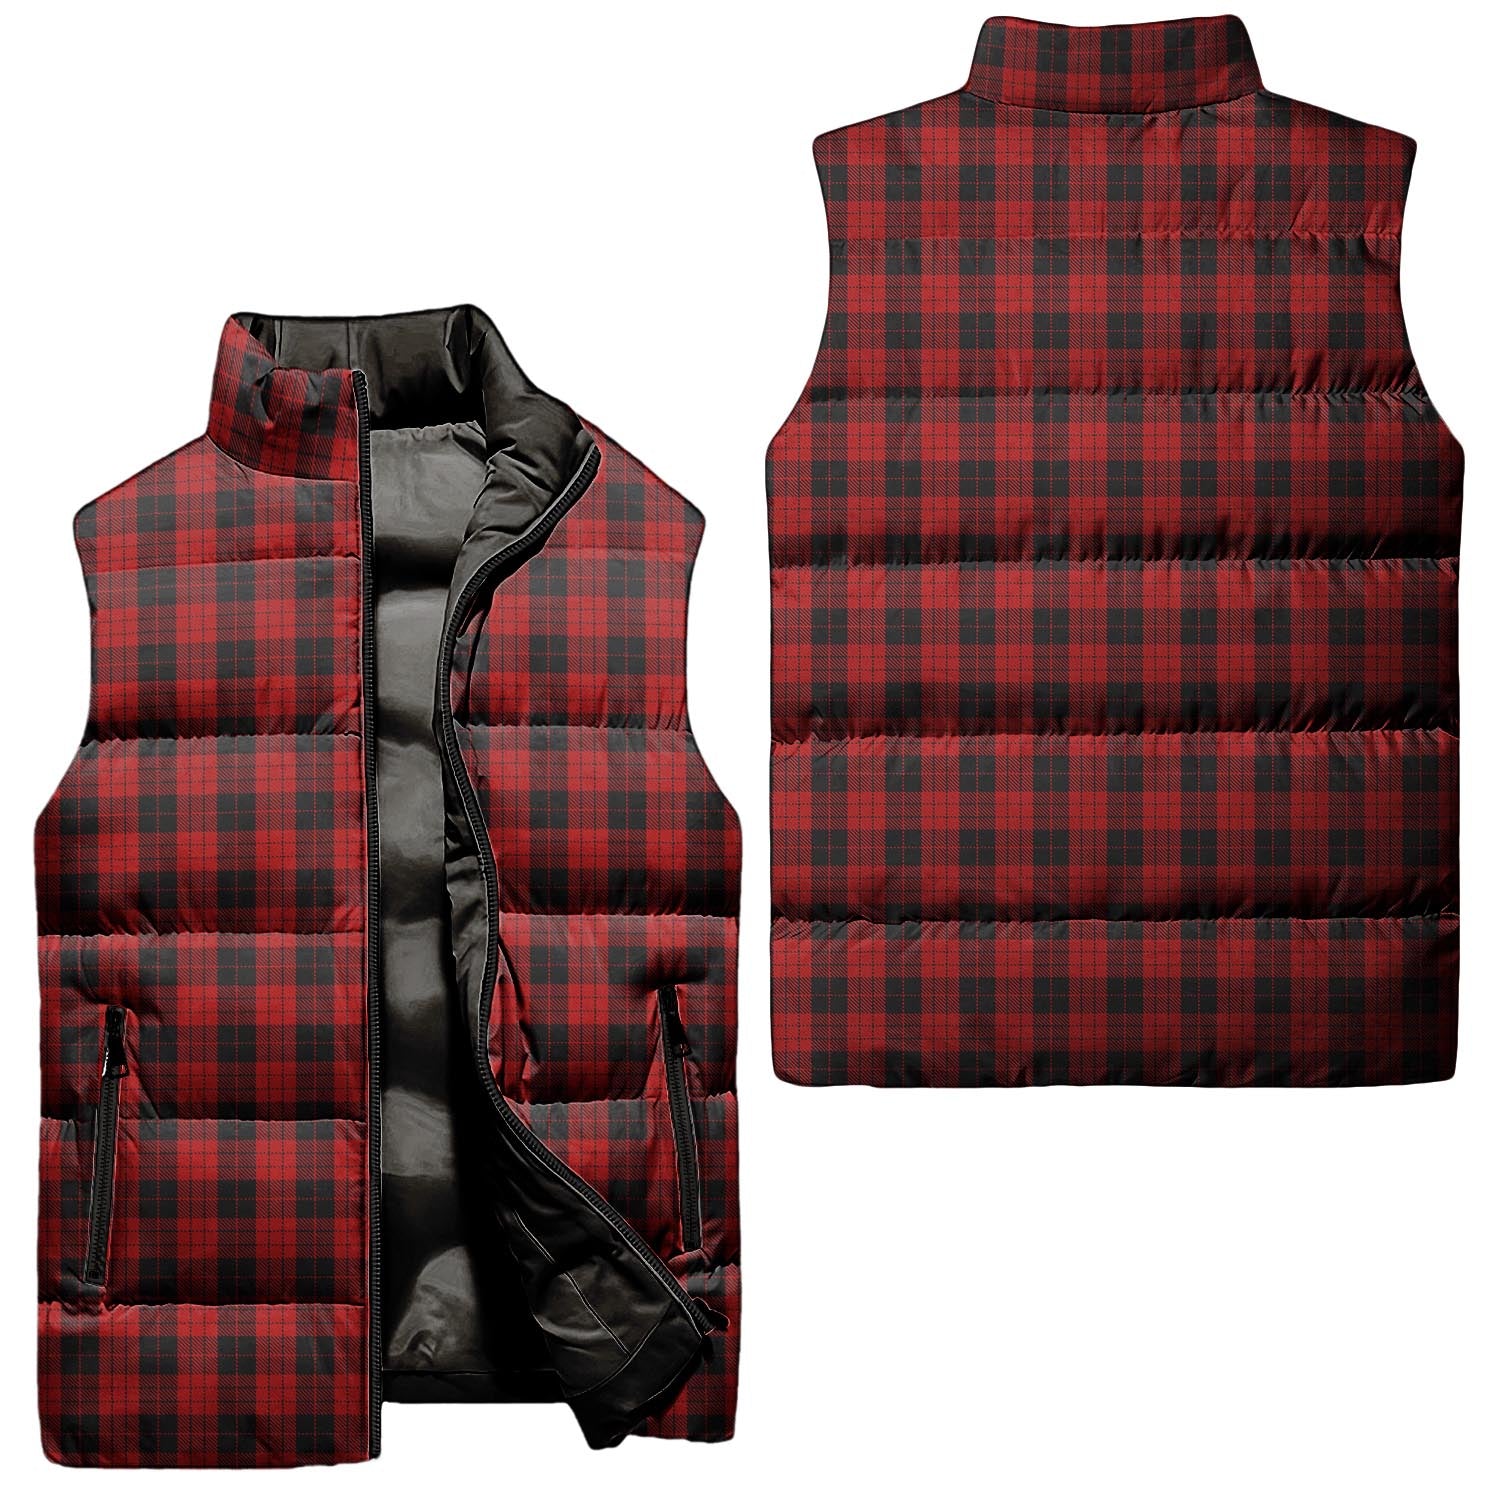 macleod-black-and-red-tartan-puffer-vest-tartan-plaid-sleeveless-down-jacket